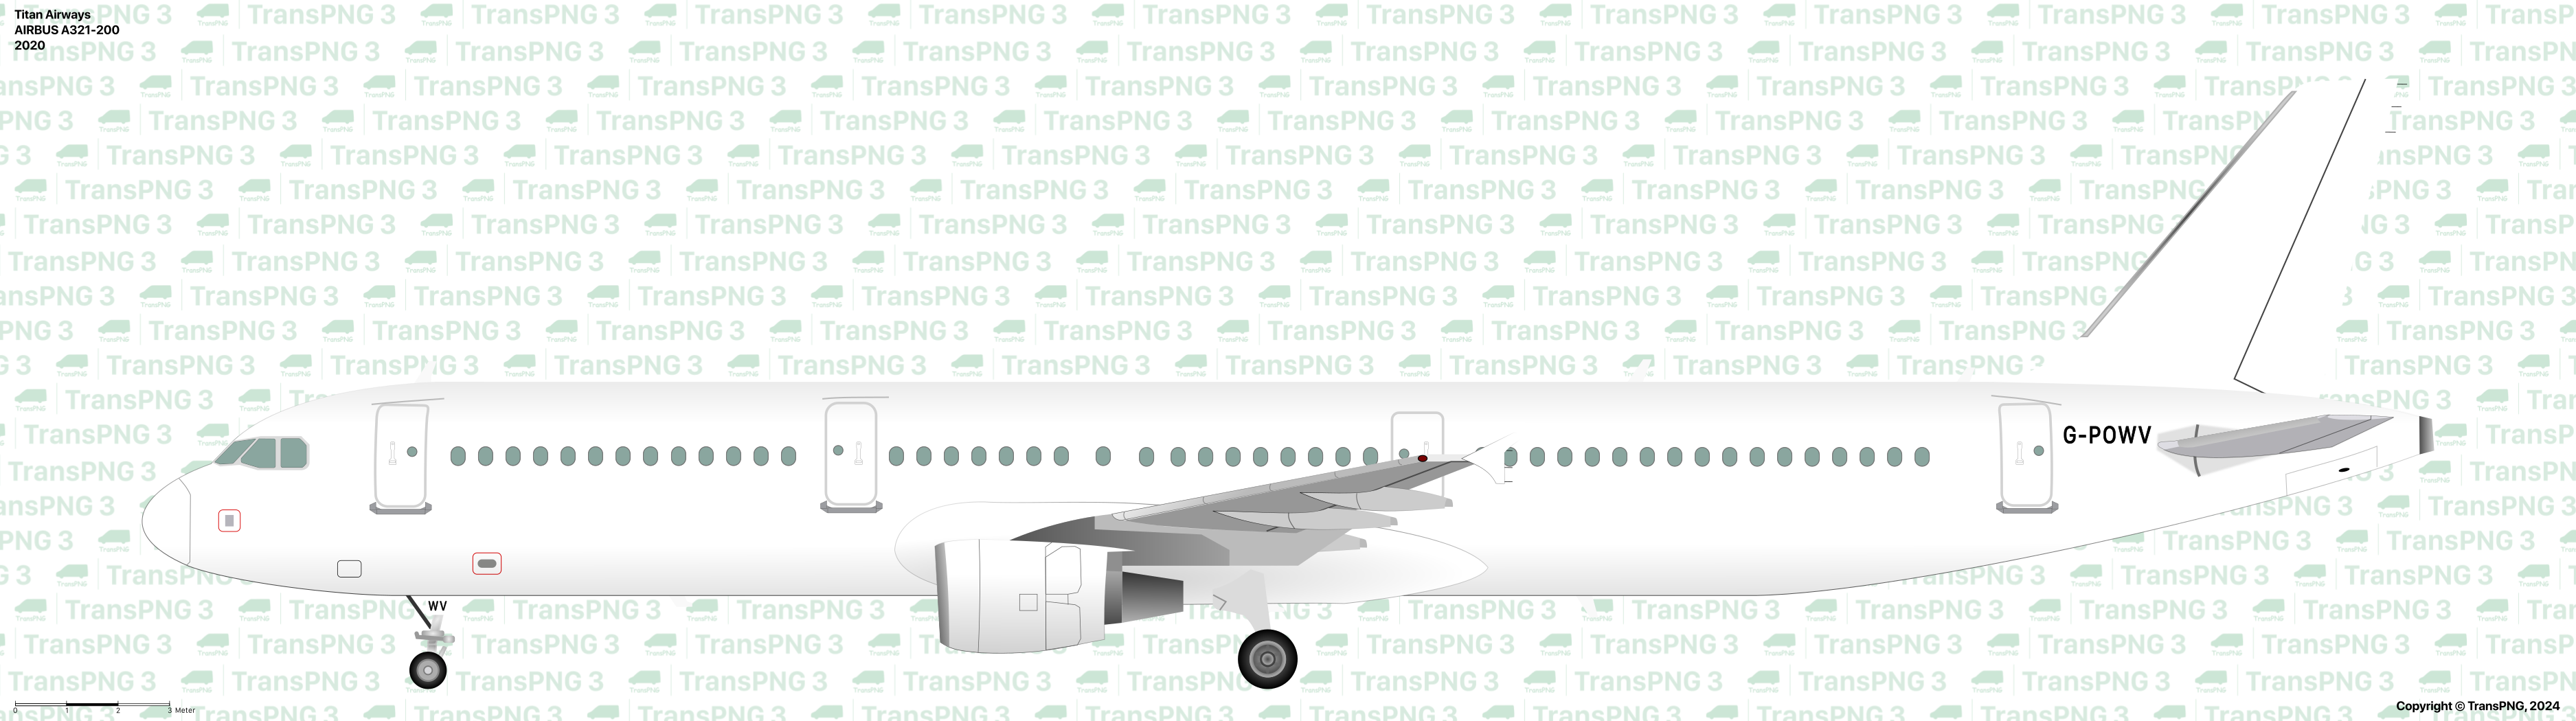 TransPNG.net | 分享世界各地多種交通工具的優秀繪圖 - 客機 53447680908_d57a218145_o